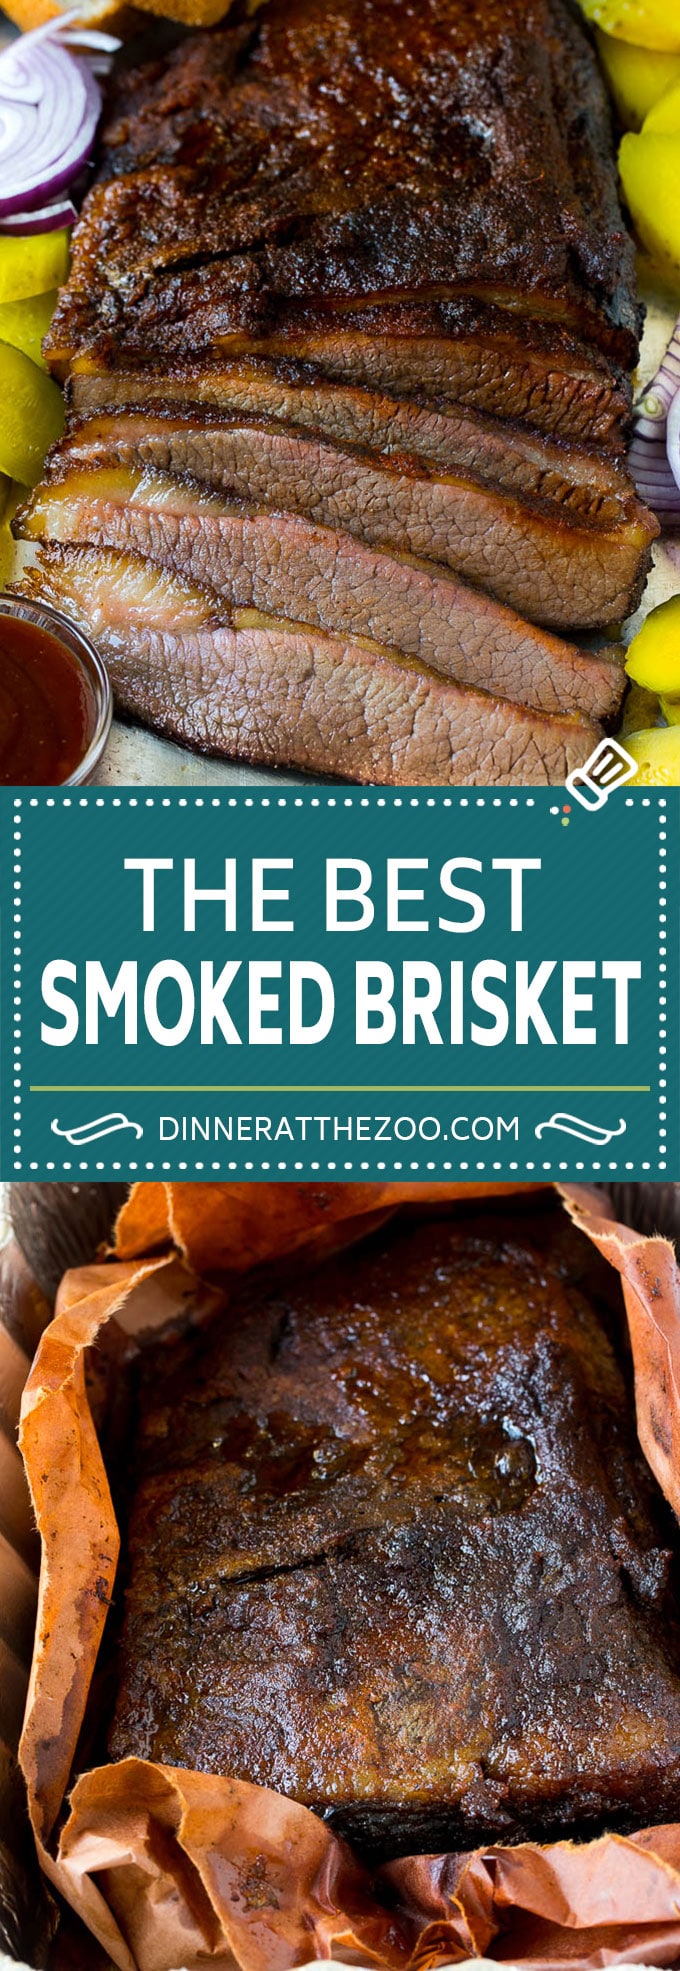 Smoked Brisket Recipe | Beef Brisket | BBQ Beef #brisket #smoker #beef #bbq #dinner #dinneratthezoo